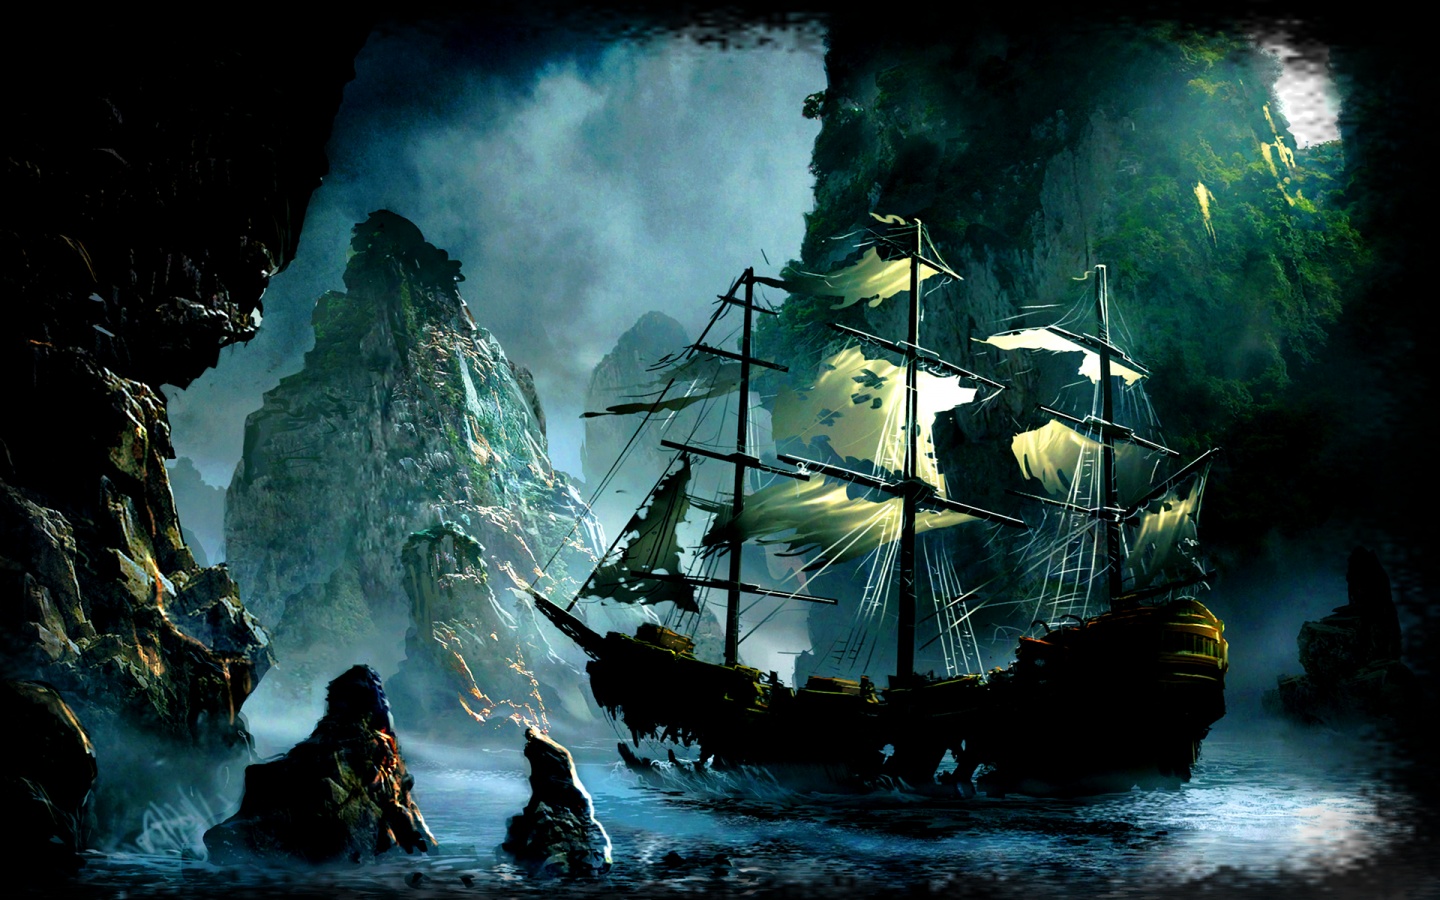 Tags Sea Ship Rocks Fantasy World Imaginary Pirate Ghost